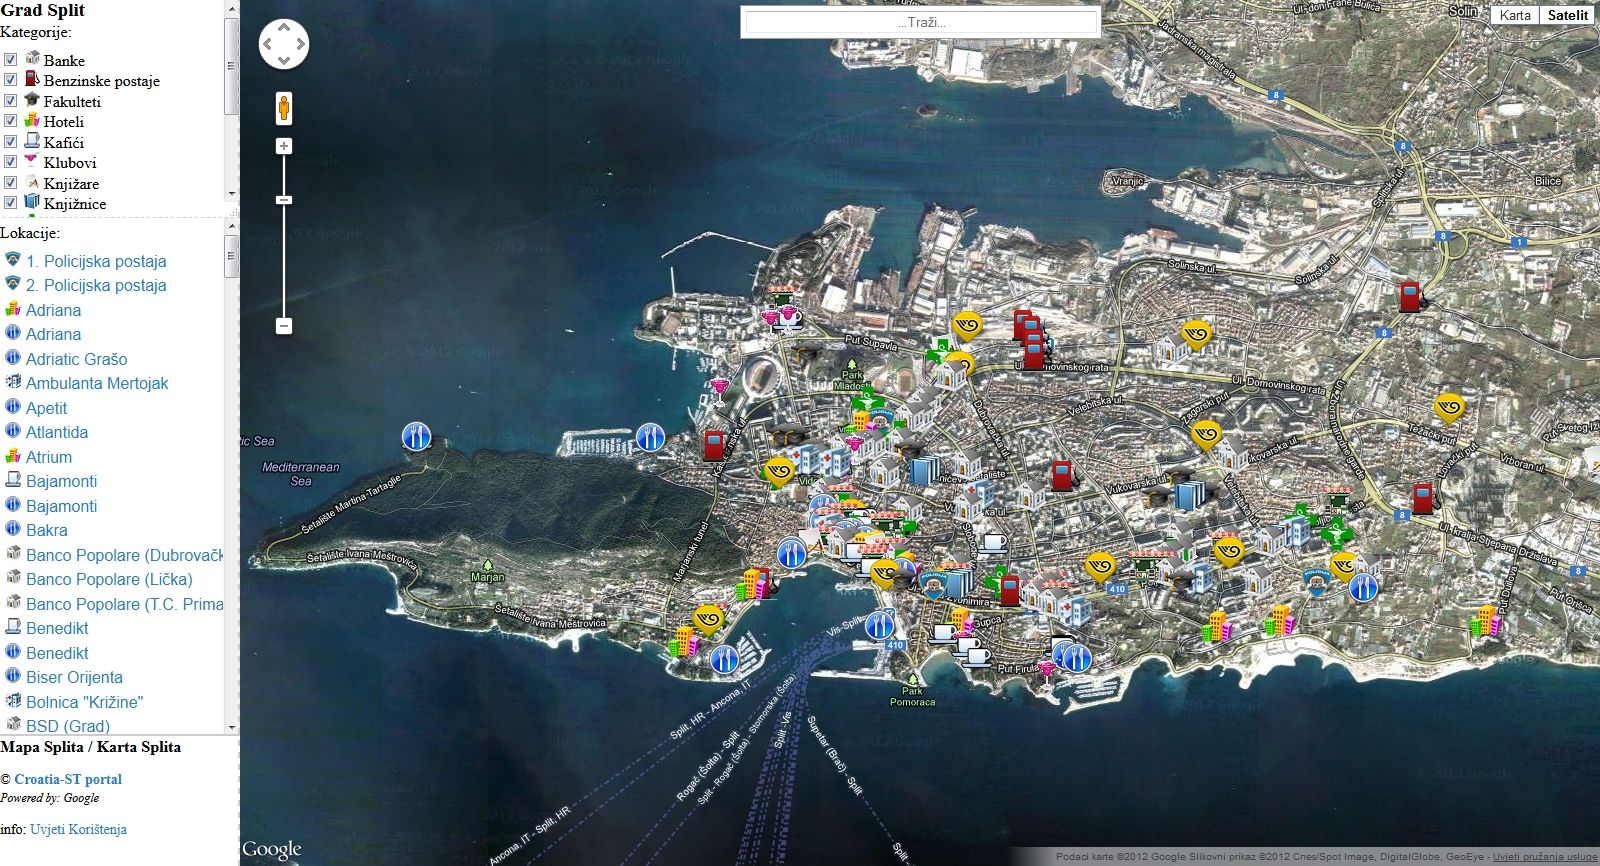 karta splita s kvartovima Mapa Splita   Karta Splita | Croatia ST portal karta splita s kvartovima